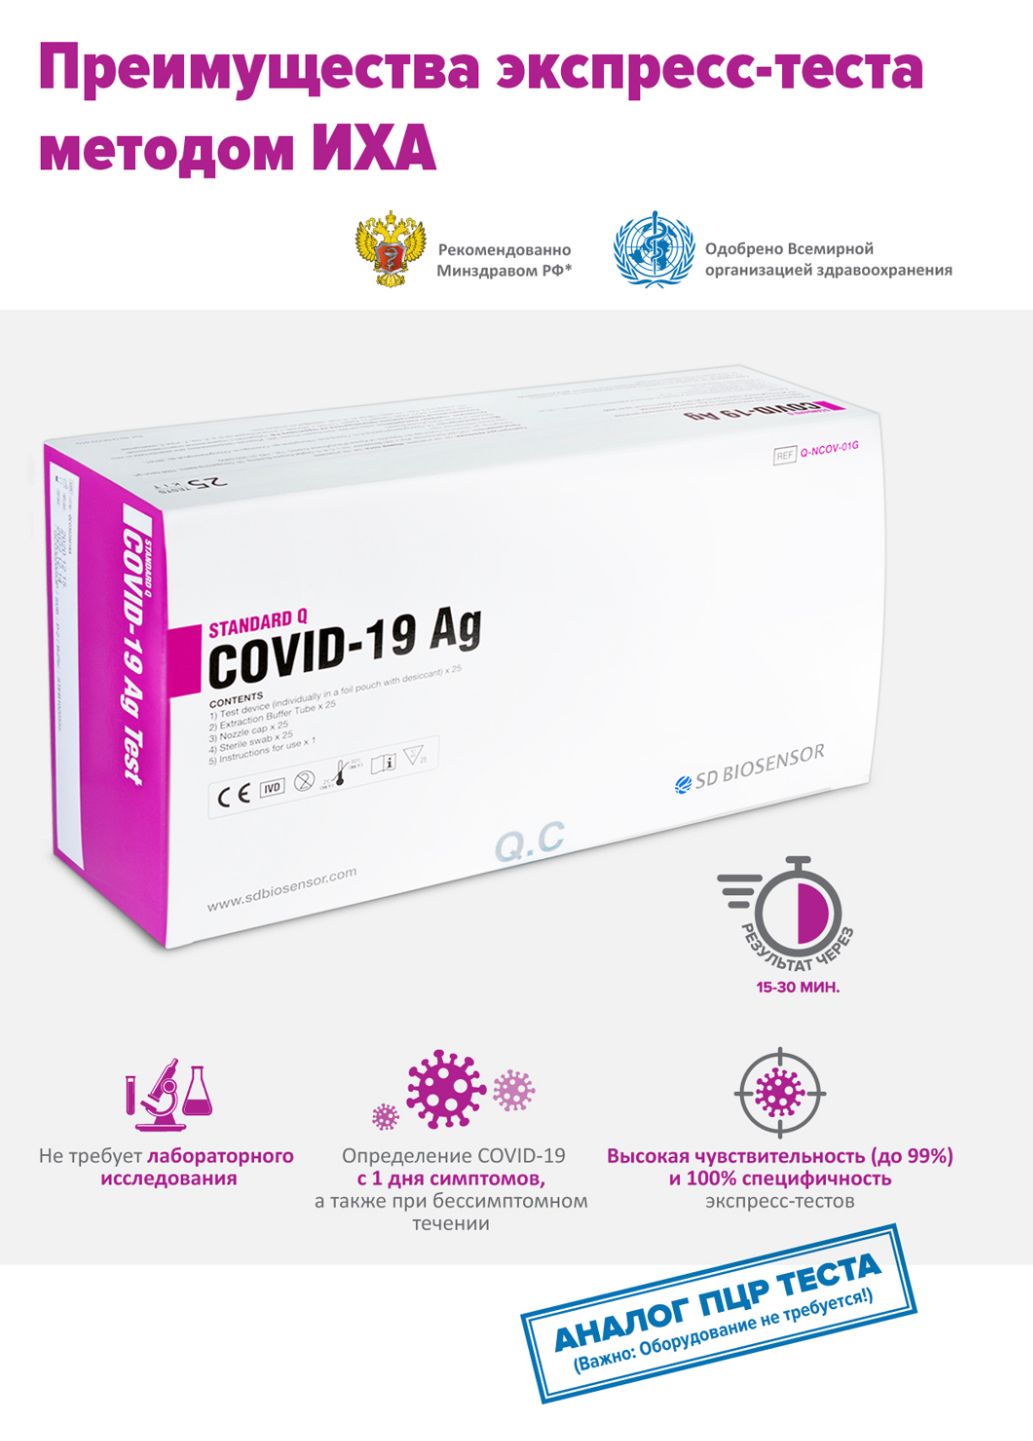 SD BIOSENSOR STANDARD Q COVID-19 AG тест на антиген sars-cov-2